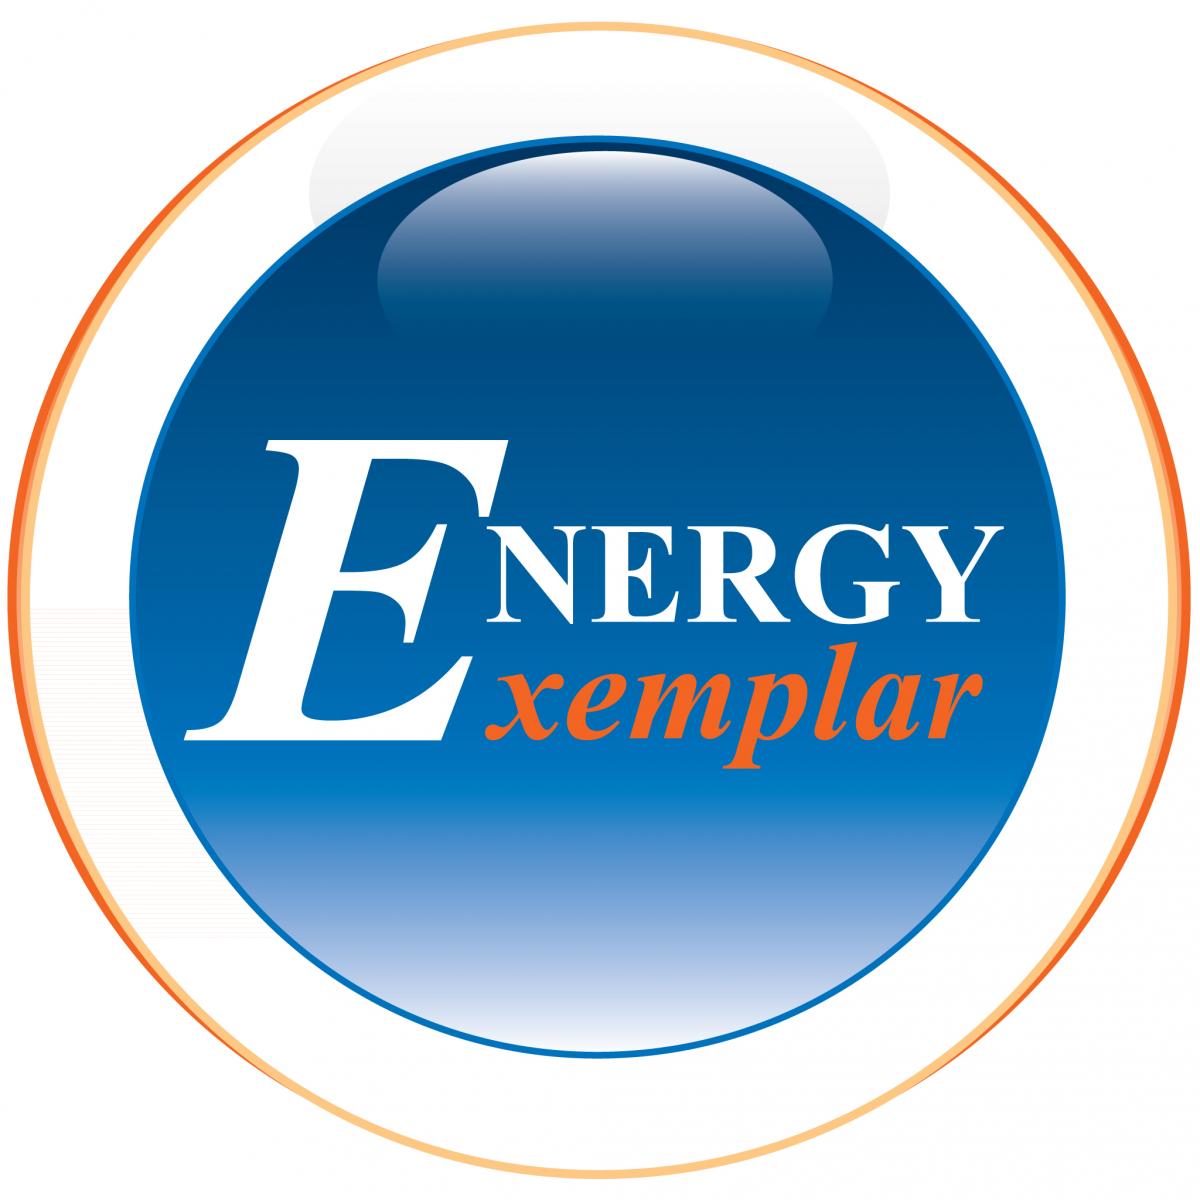 Energy Exemplar at Eastern Australia's Energy Markets Outlook 2013 Conference Sydney